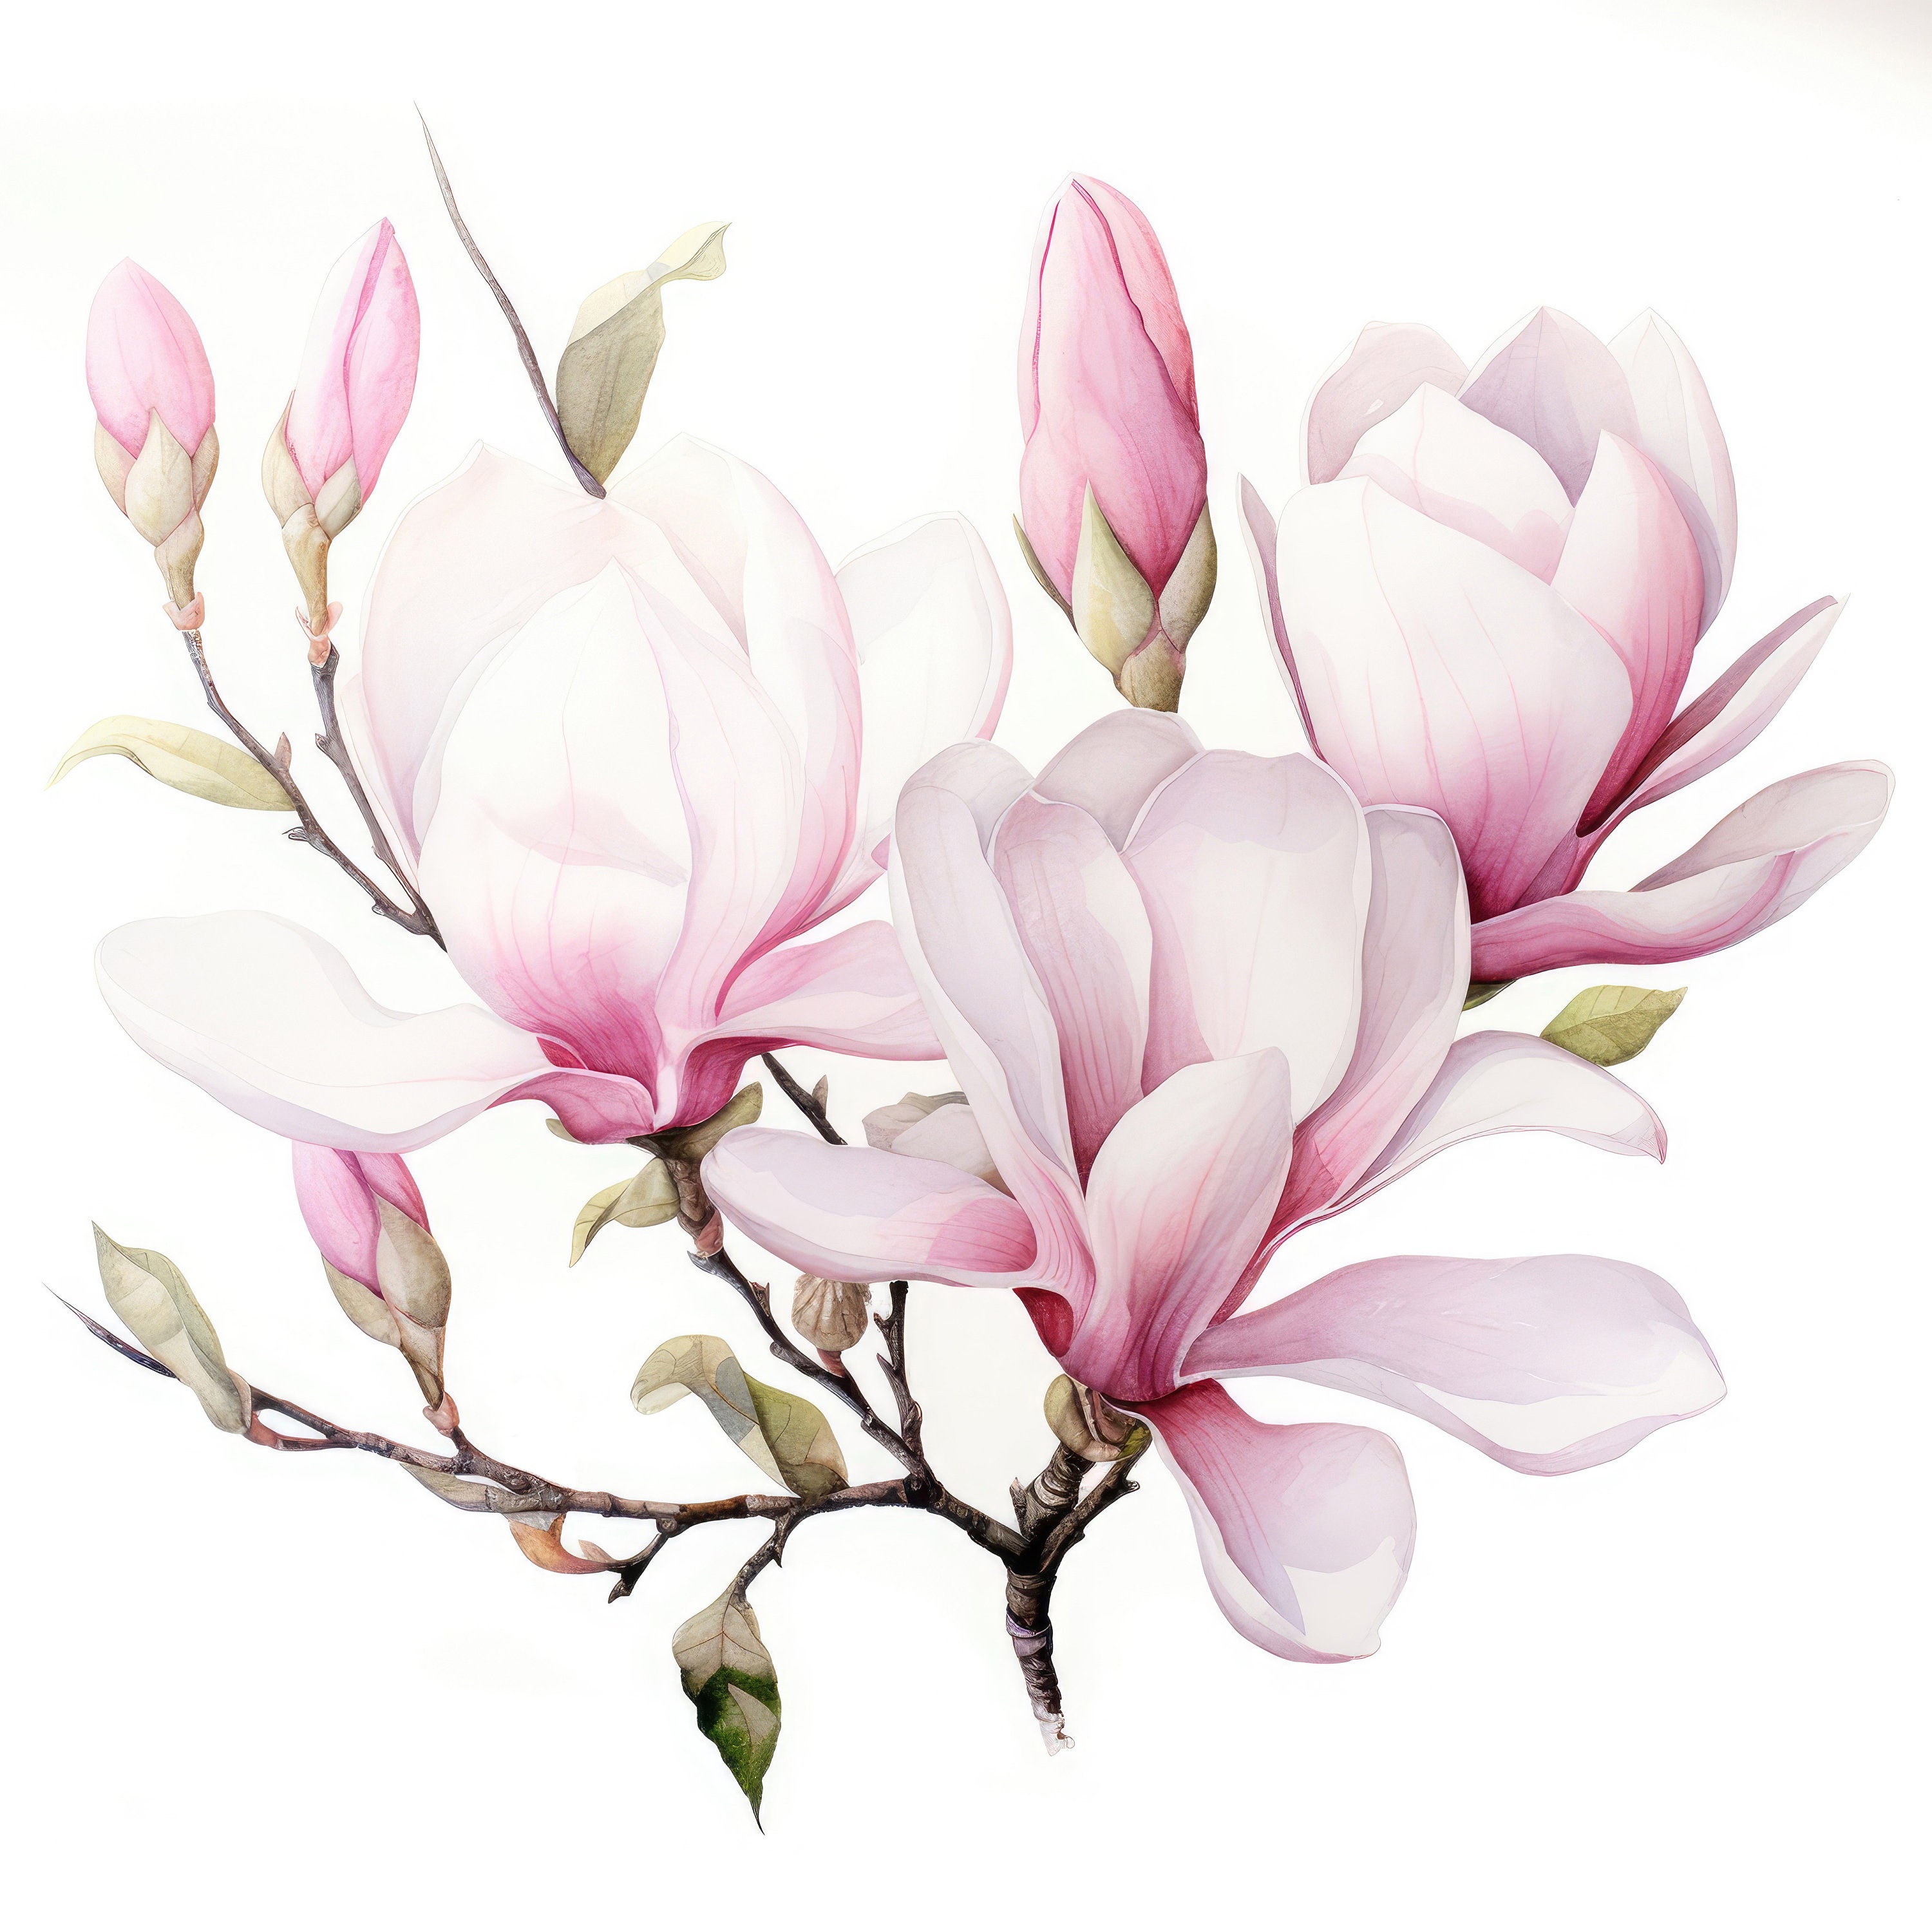 Magnolia Flower Clipart 10 High Quality JPG Scrapbooking, Card Making ...